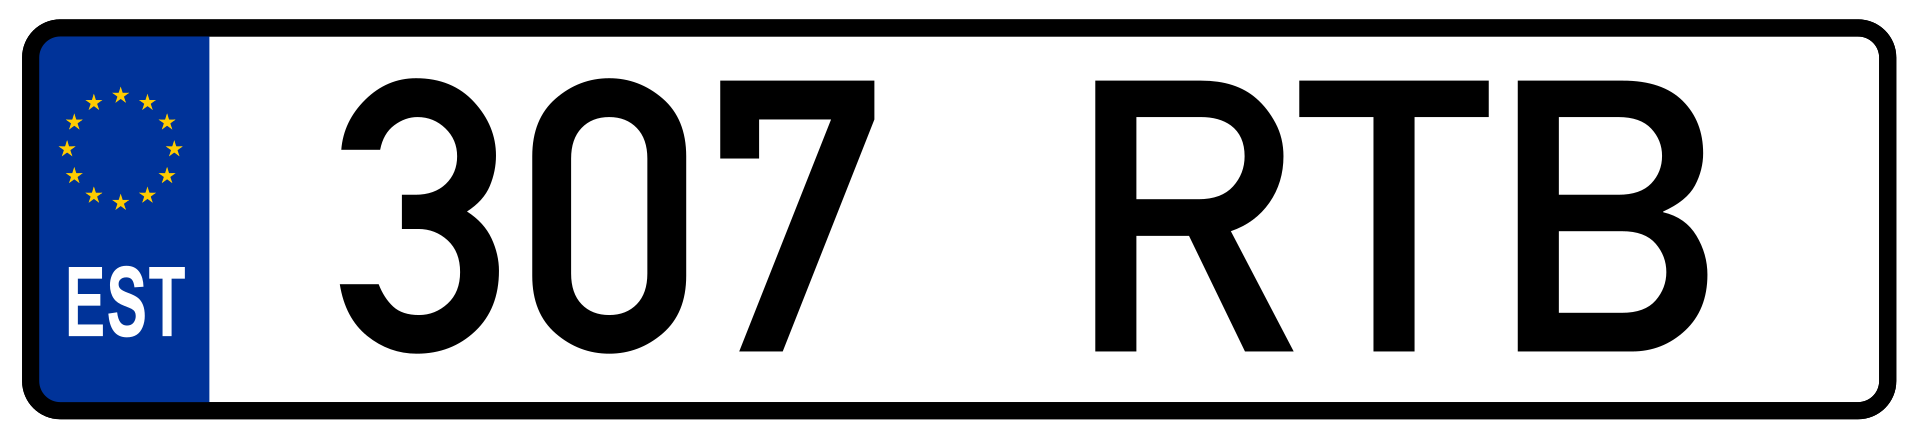 1920px-Estonian_license_plate.svg.png